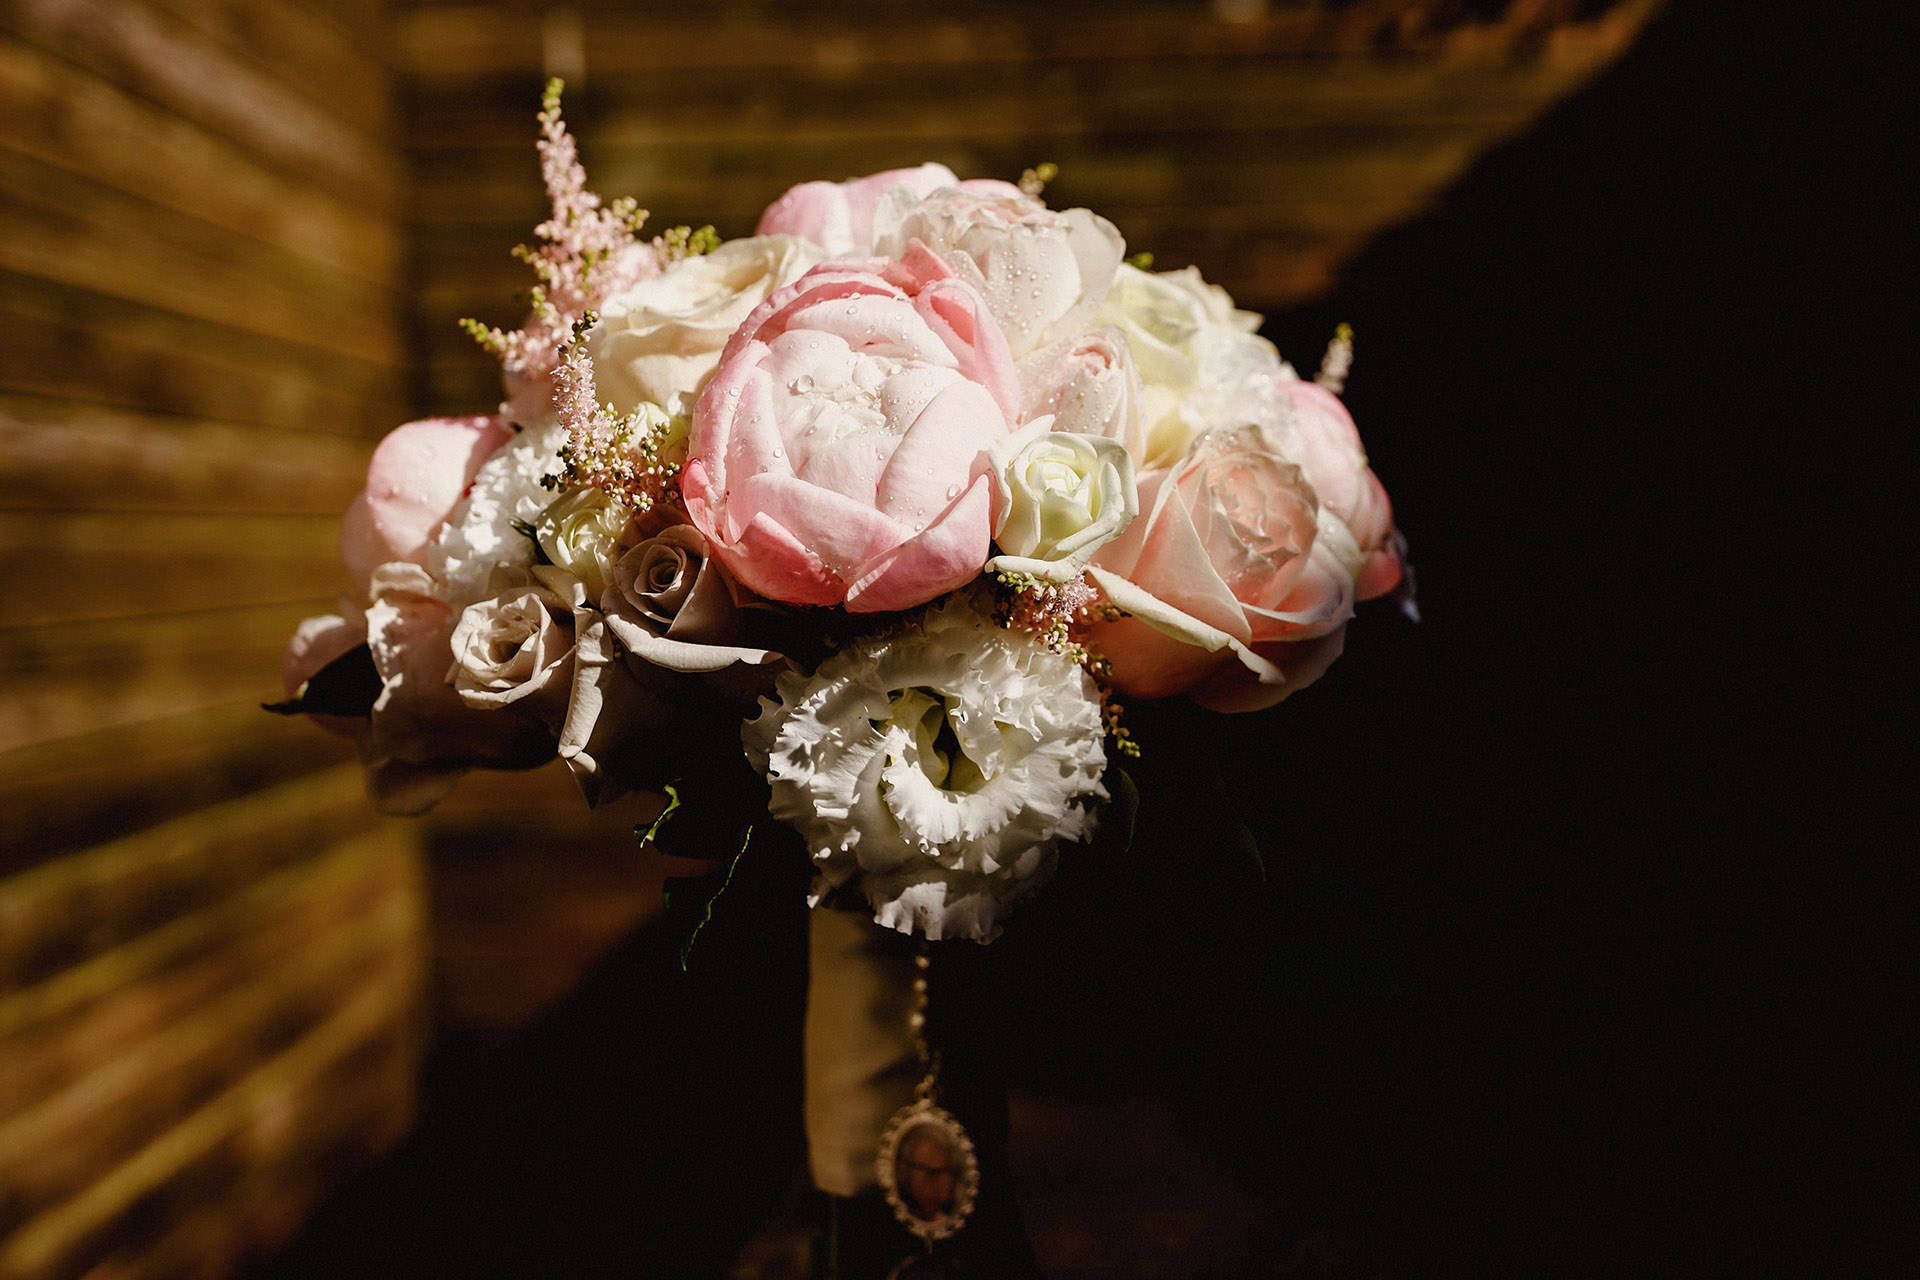 Boquet of wedding flowers